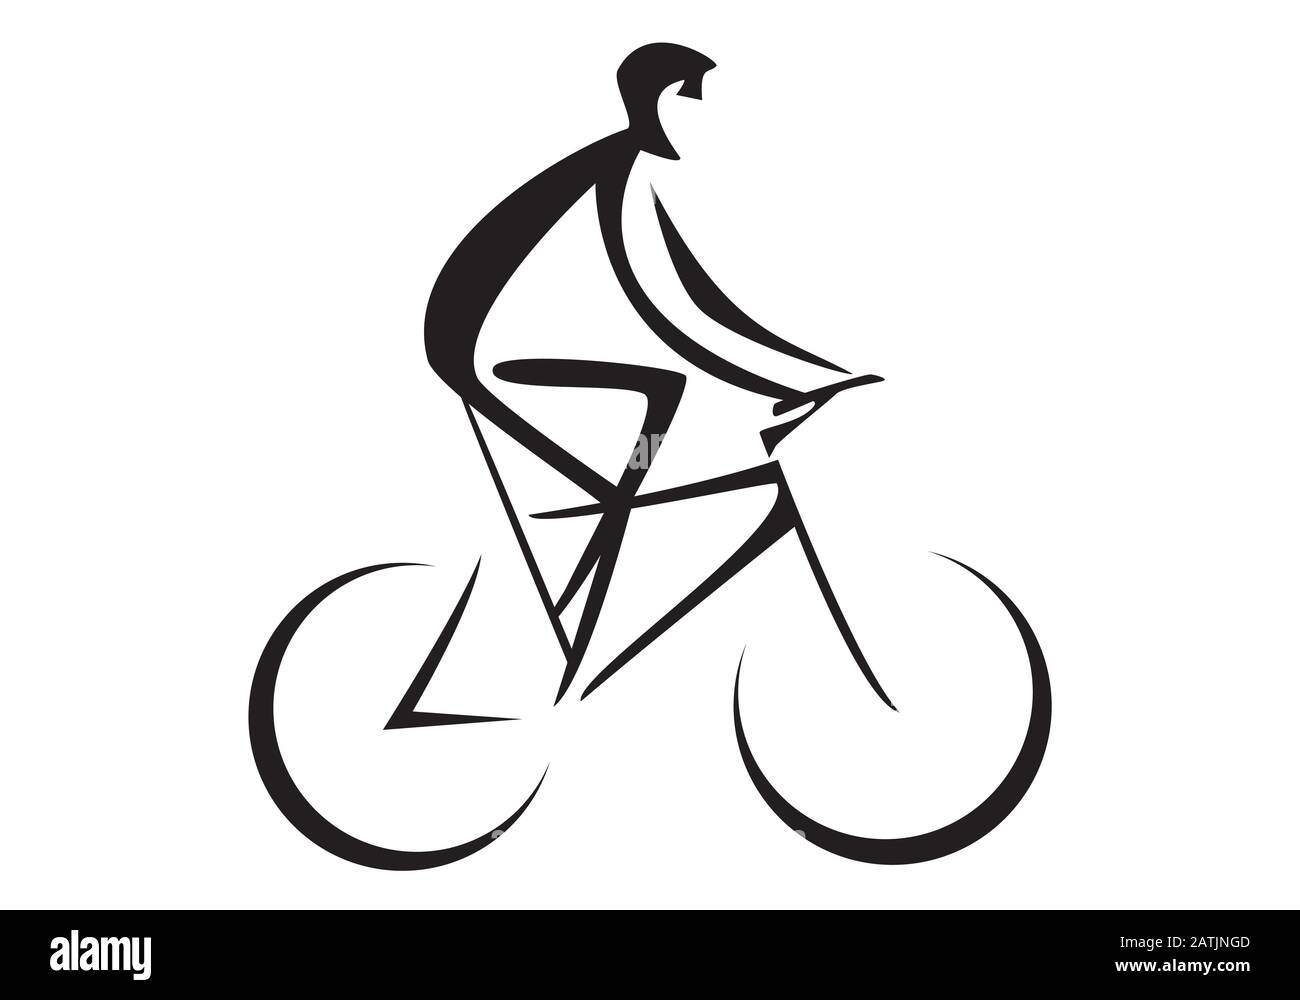 Andar en bicicleta dibujo fotografías e imágenes de alta resolución - Alamy